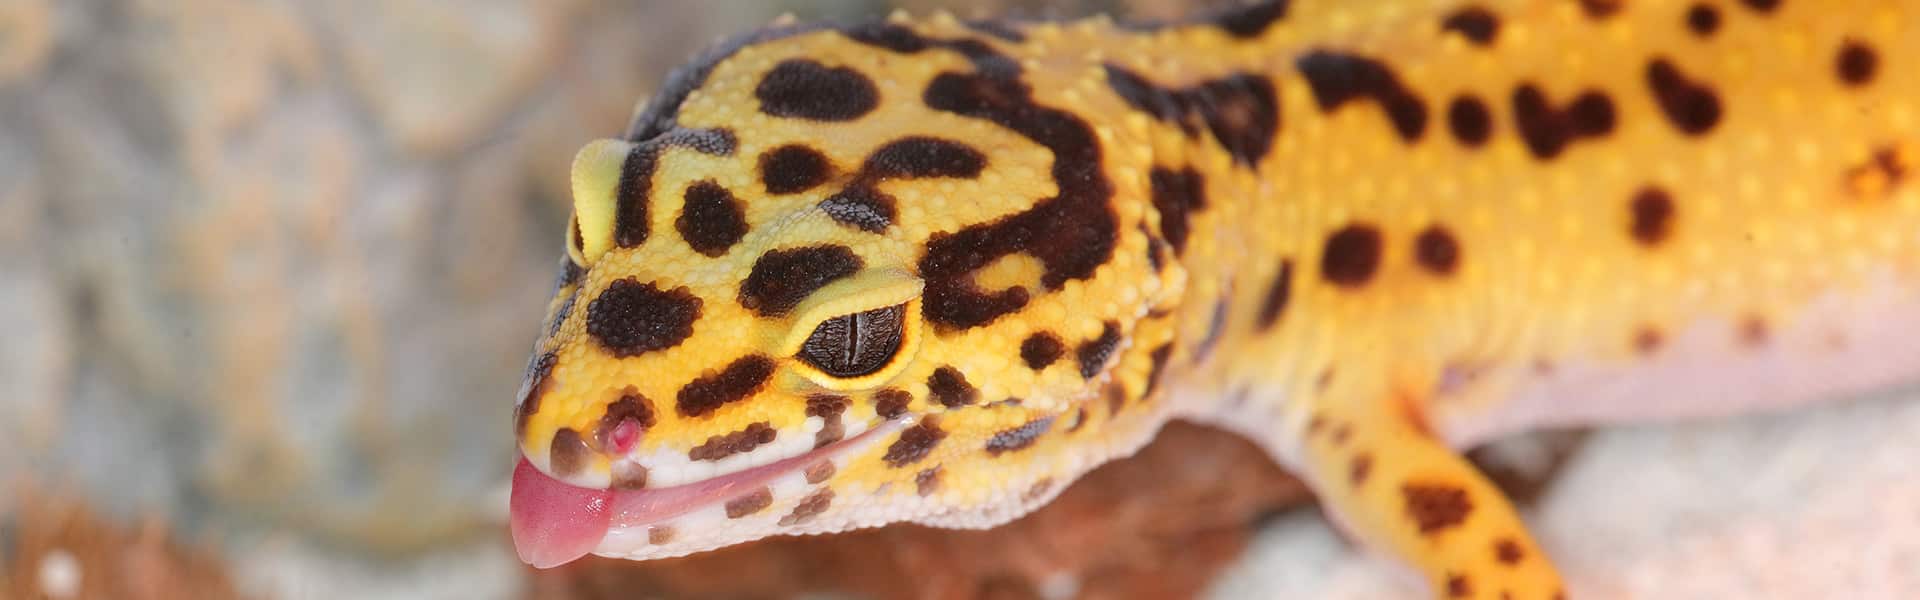 Leopard Gecko